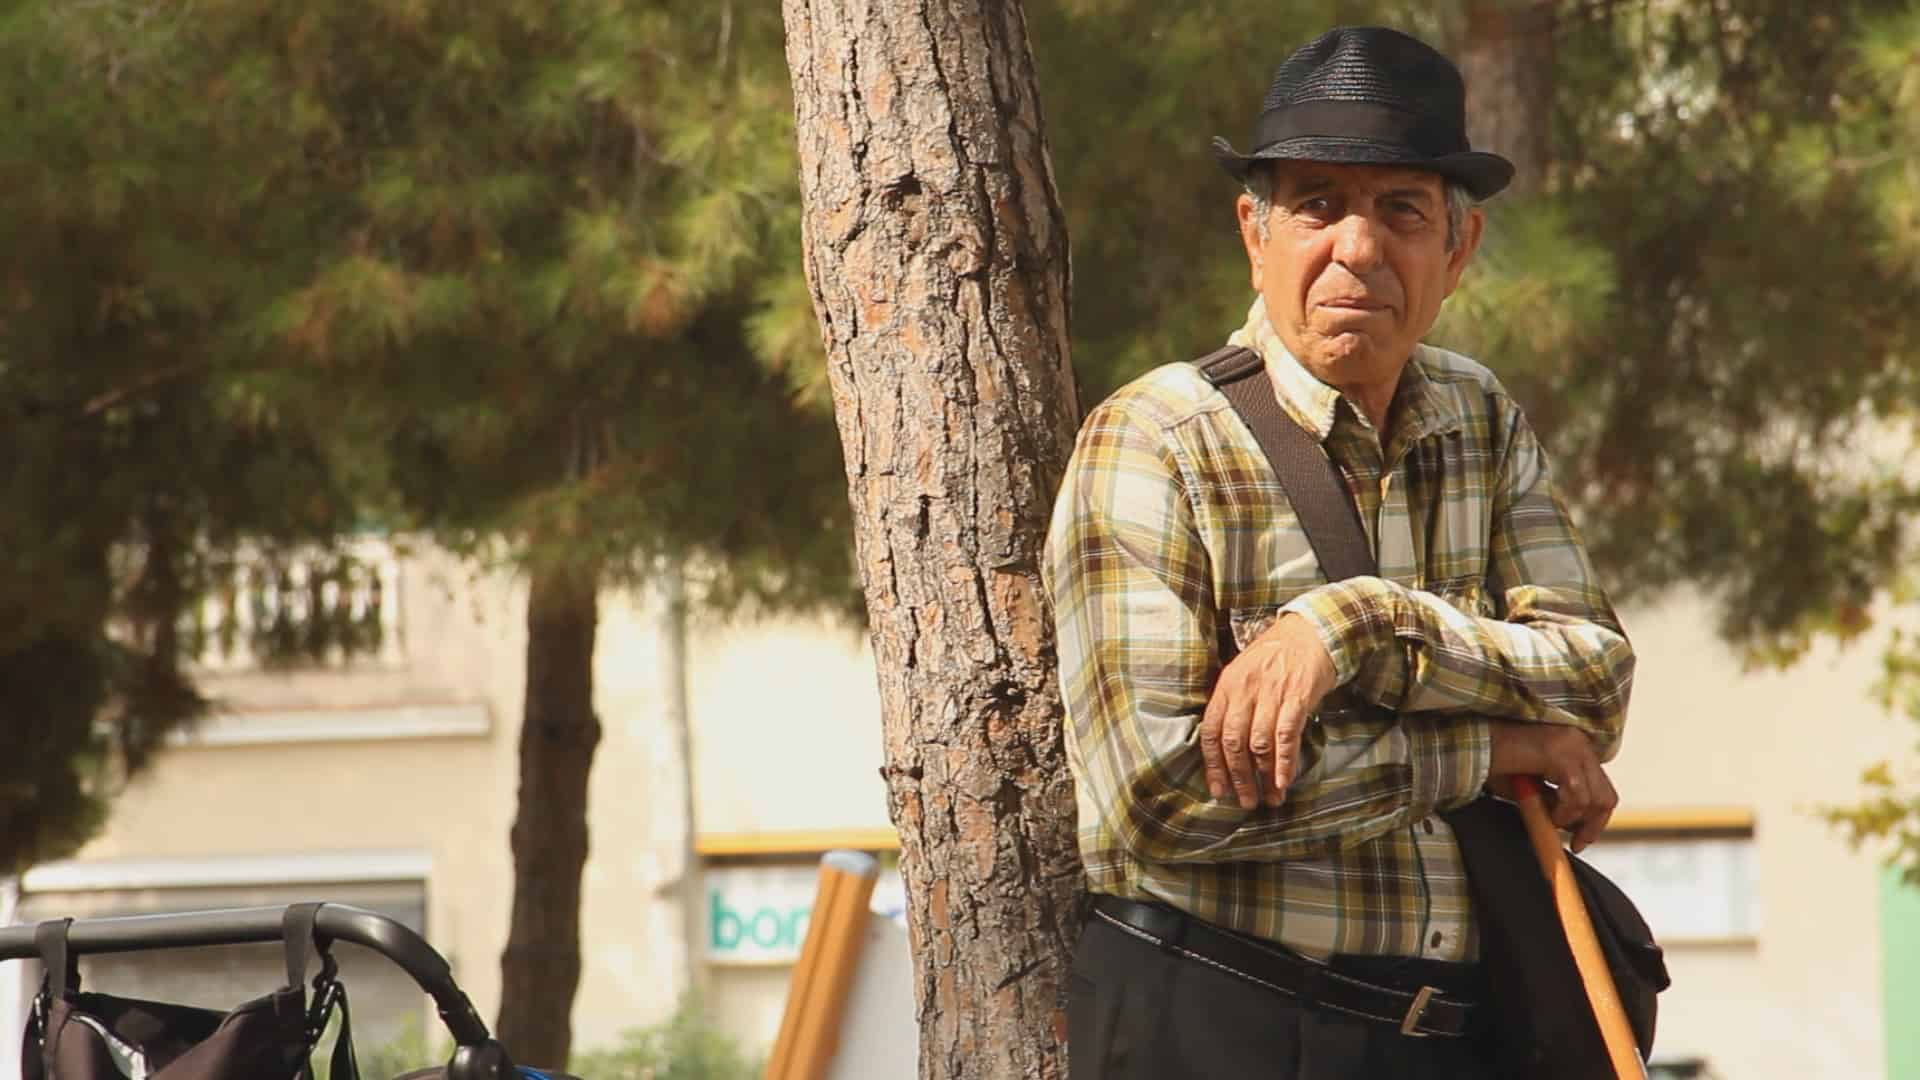 A Global Joy Dokumentarfilm - Älterer Herr lehnt am Baum - Filmproduktion hawkins.film